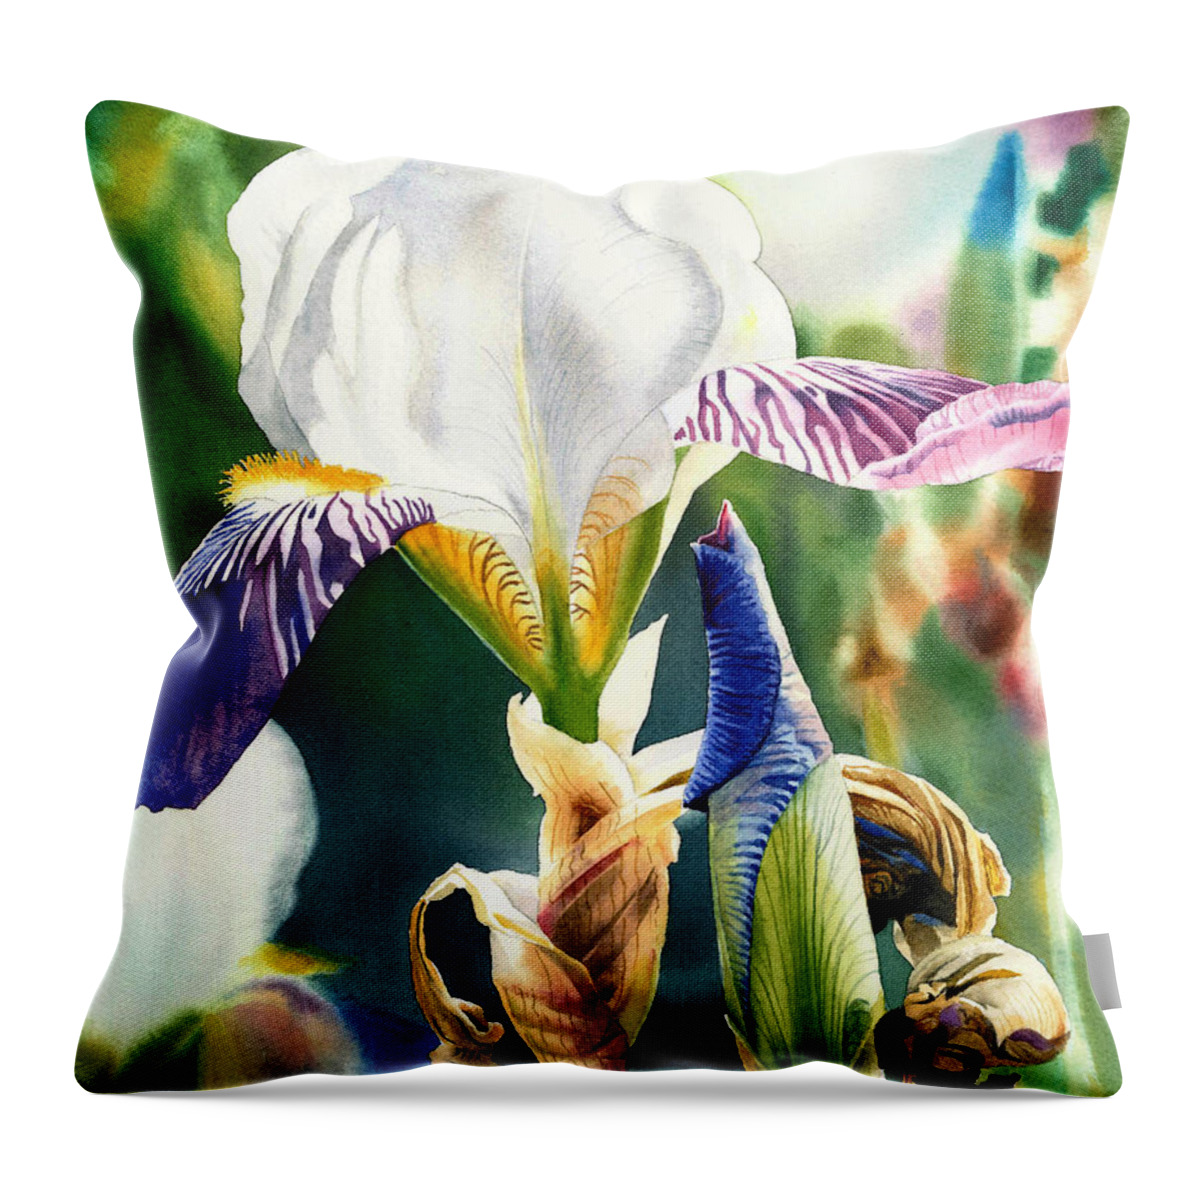 Iris Throw Pillow featuring the painting Translucent Iris by Espero Art